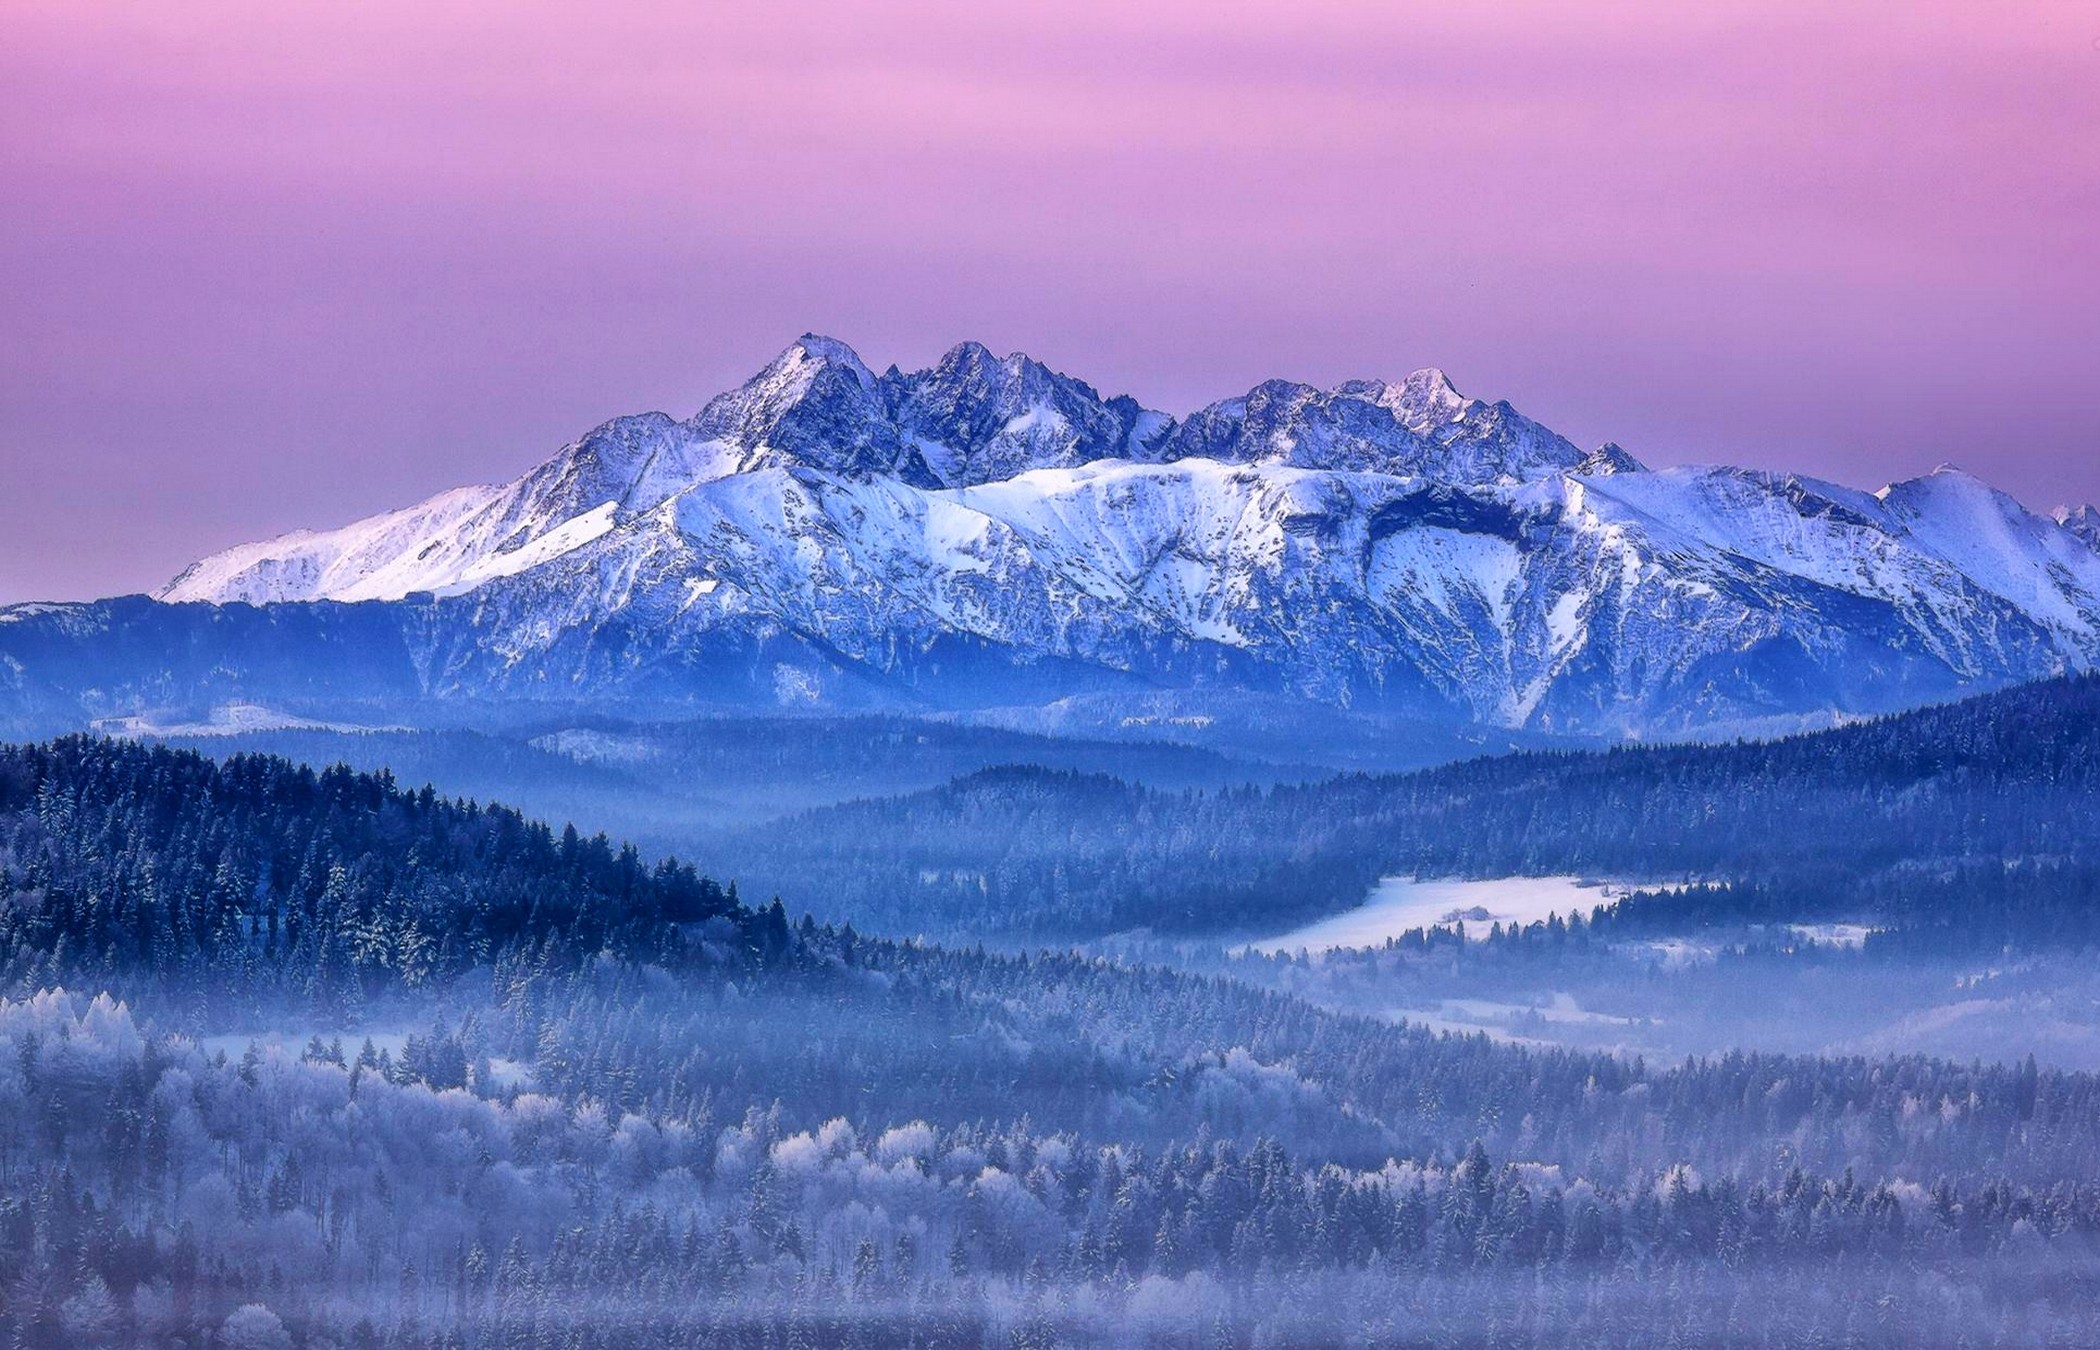 General 2100x1350 nature landscape mountains winter pink sky forest mist snow Slovakia blue snowy peak